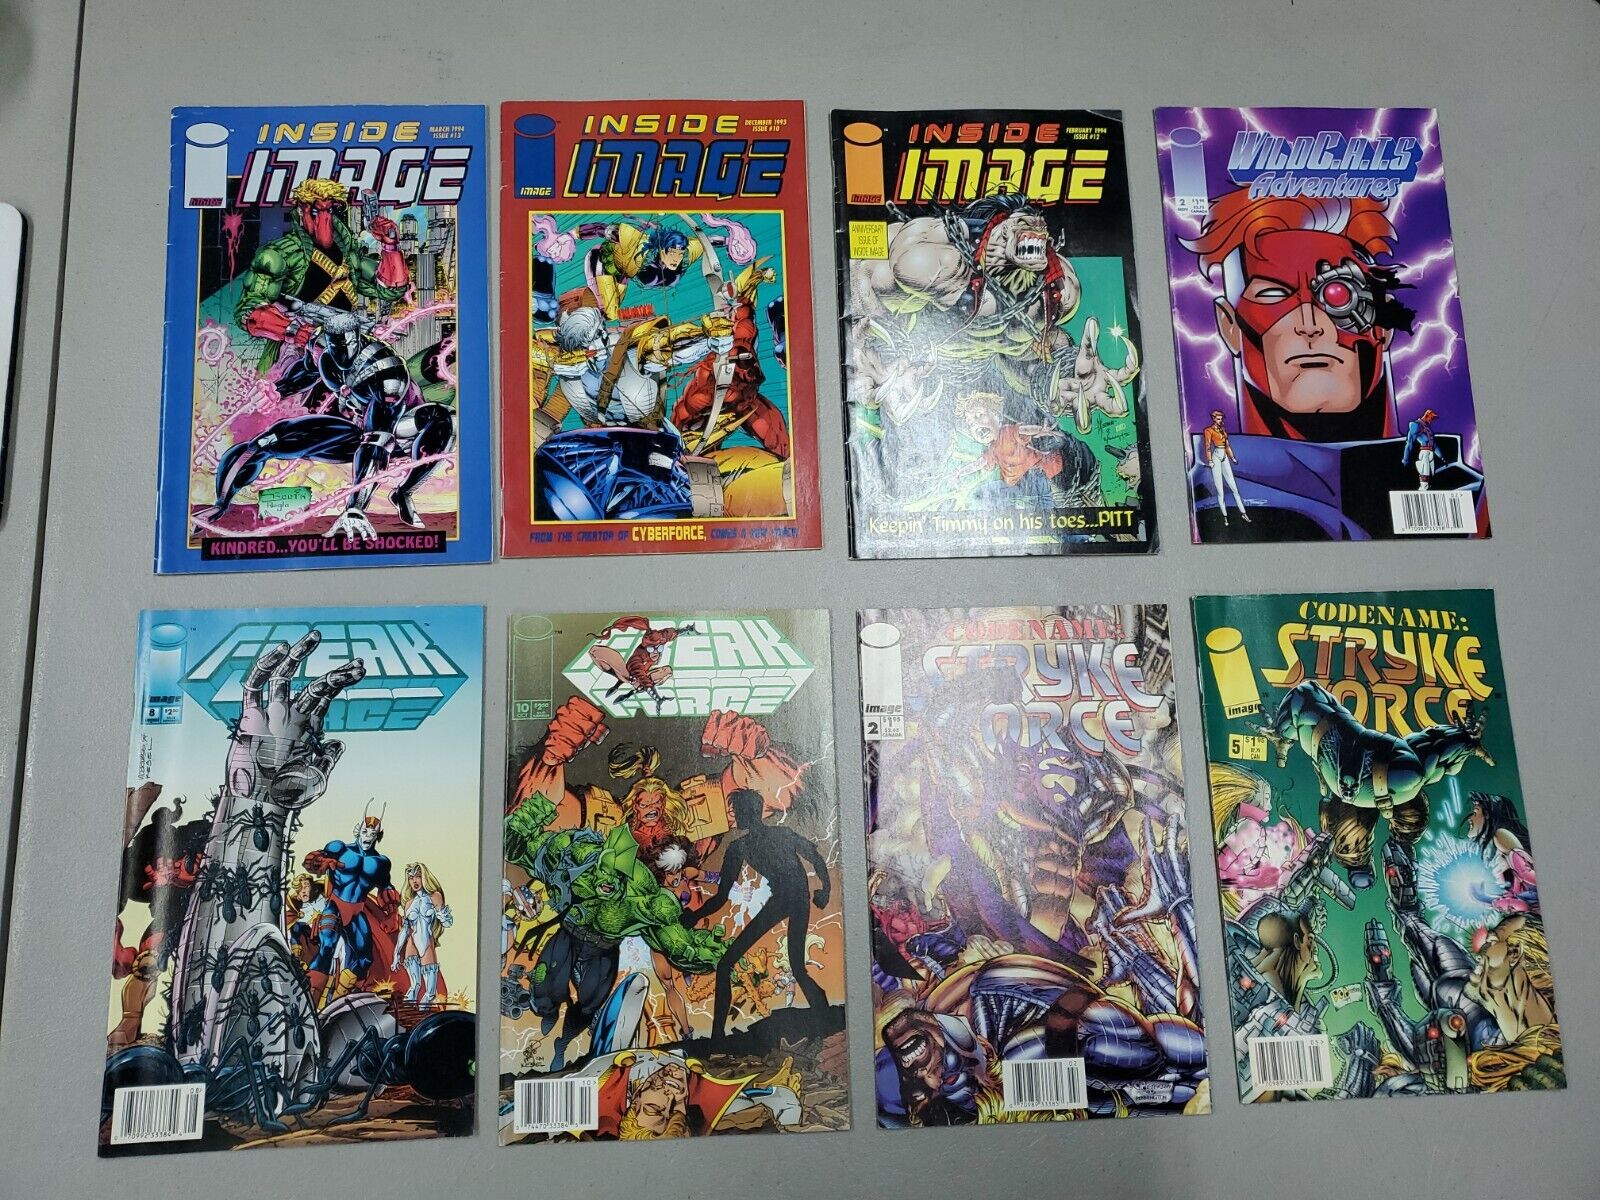 Lot (8) Image Comic Books Inside Image/Freak Force/Stryke Force/Wildcats